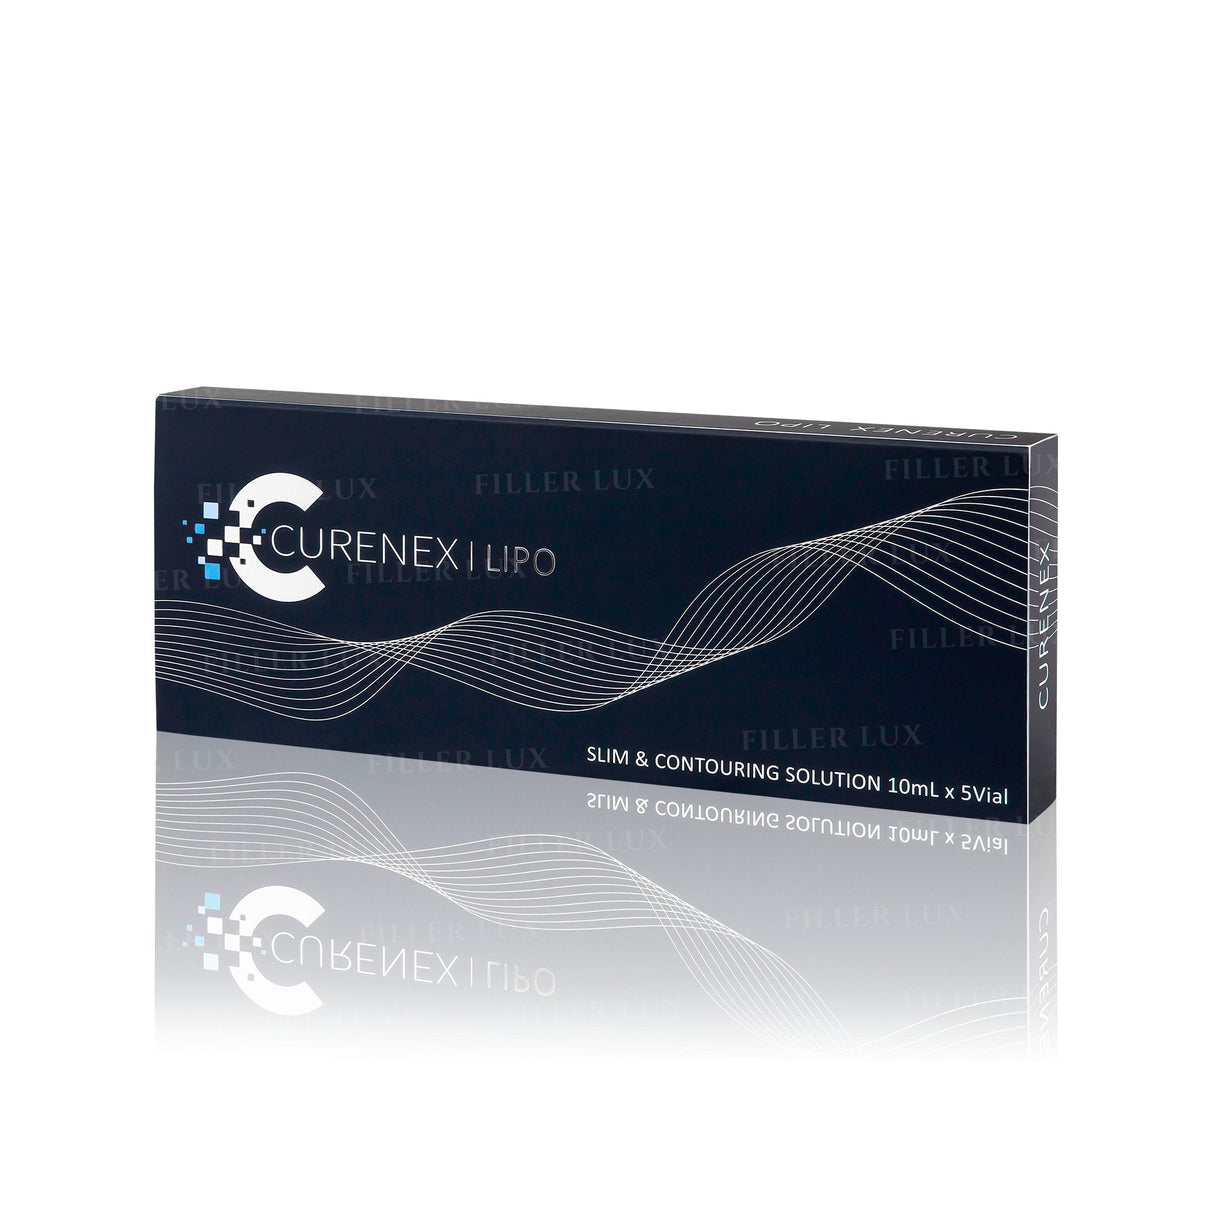 Curenex Lipo - Filler Lux™ - Lipolytic - K Derma